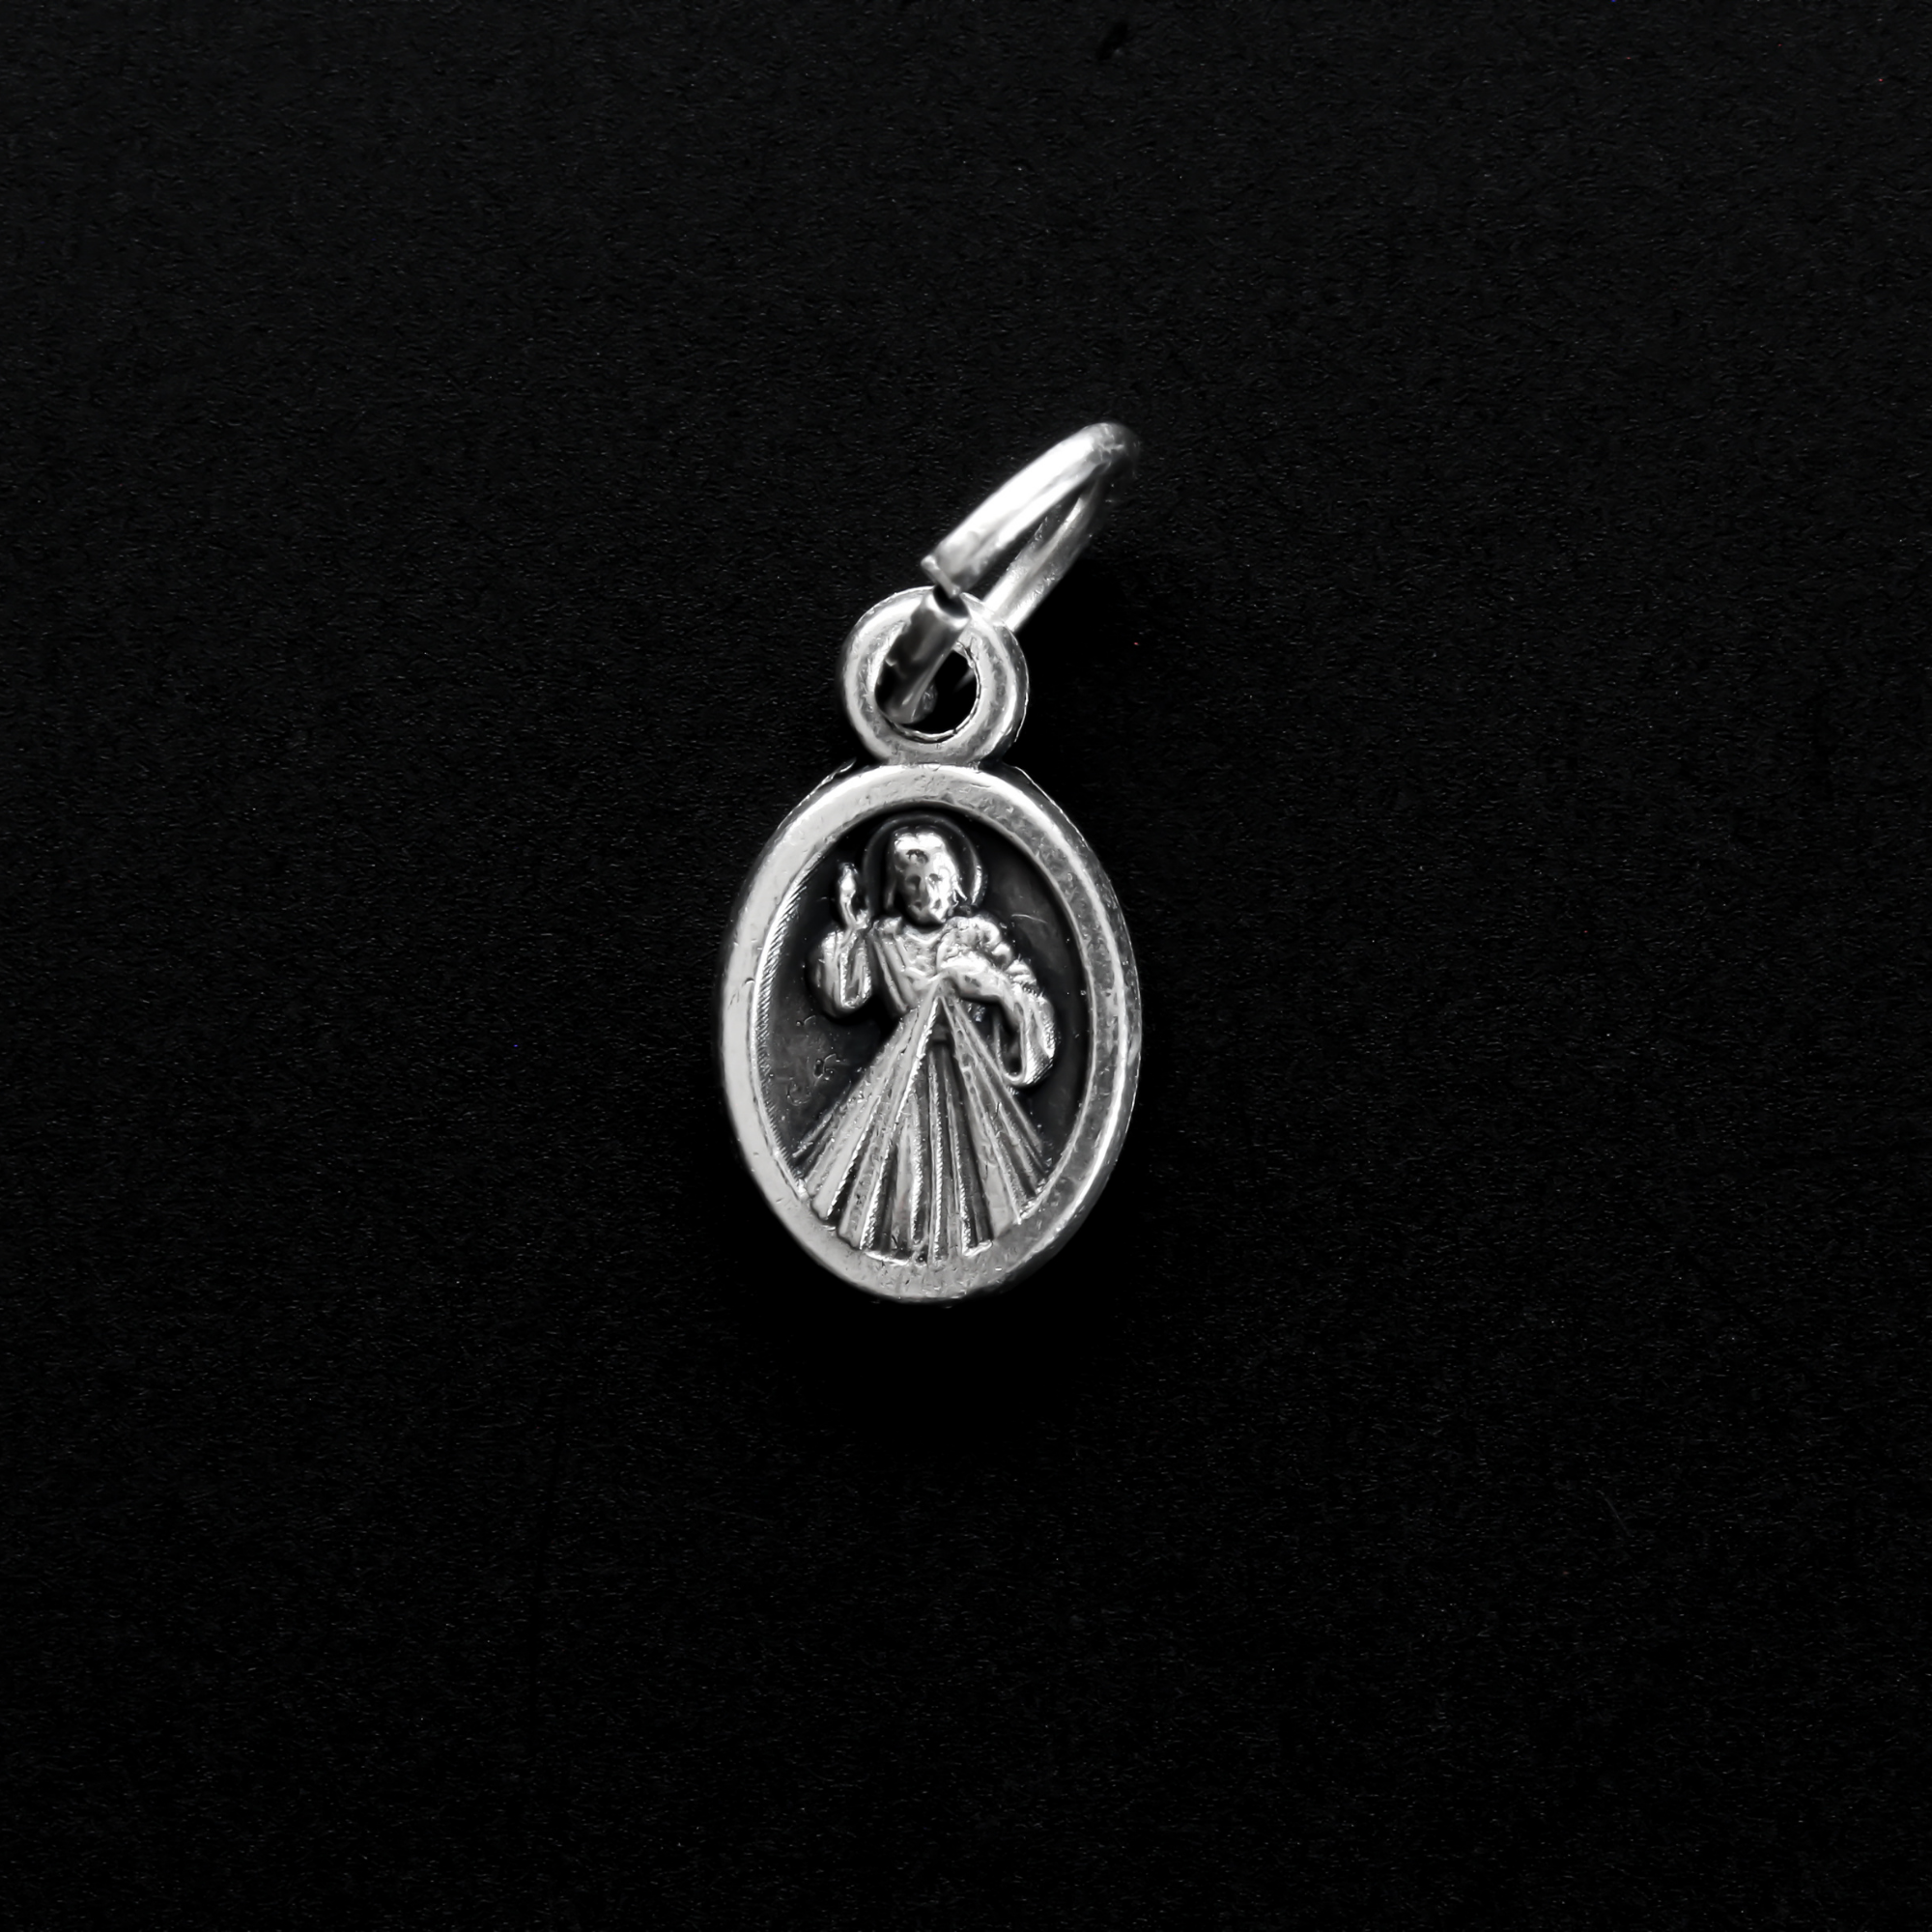 Tiny Divine Mercy of Jesus medal with "Pray For Us" written in Spanish on the backside: Ruega Por Nosotros.